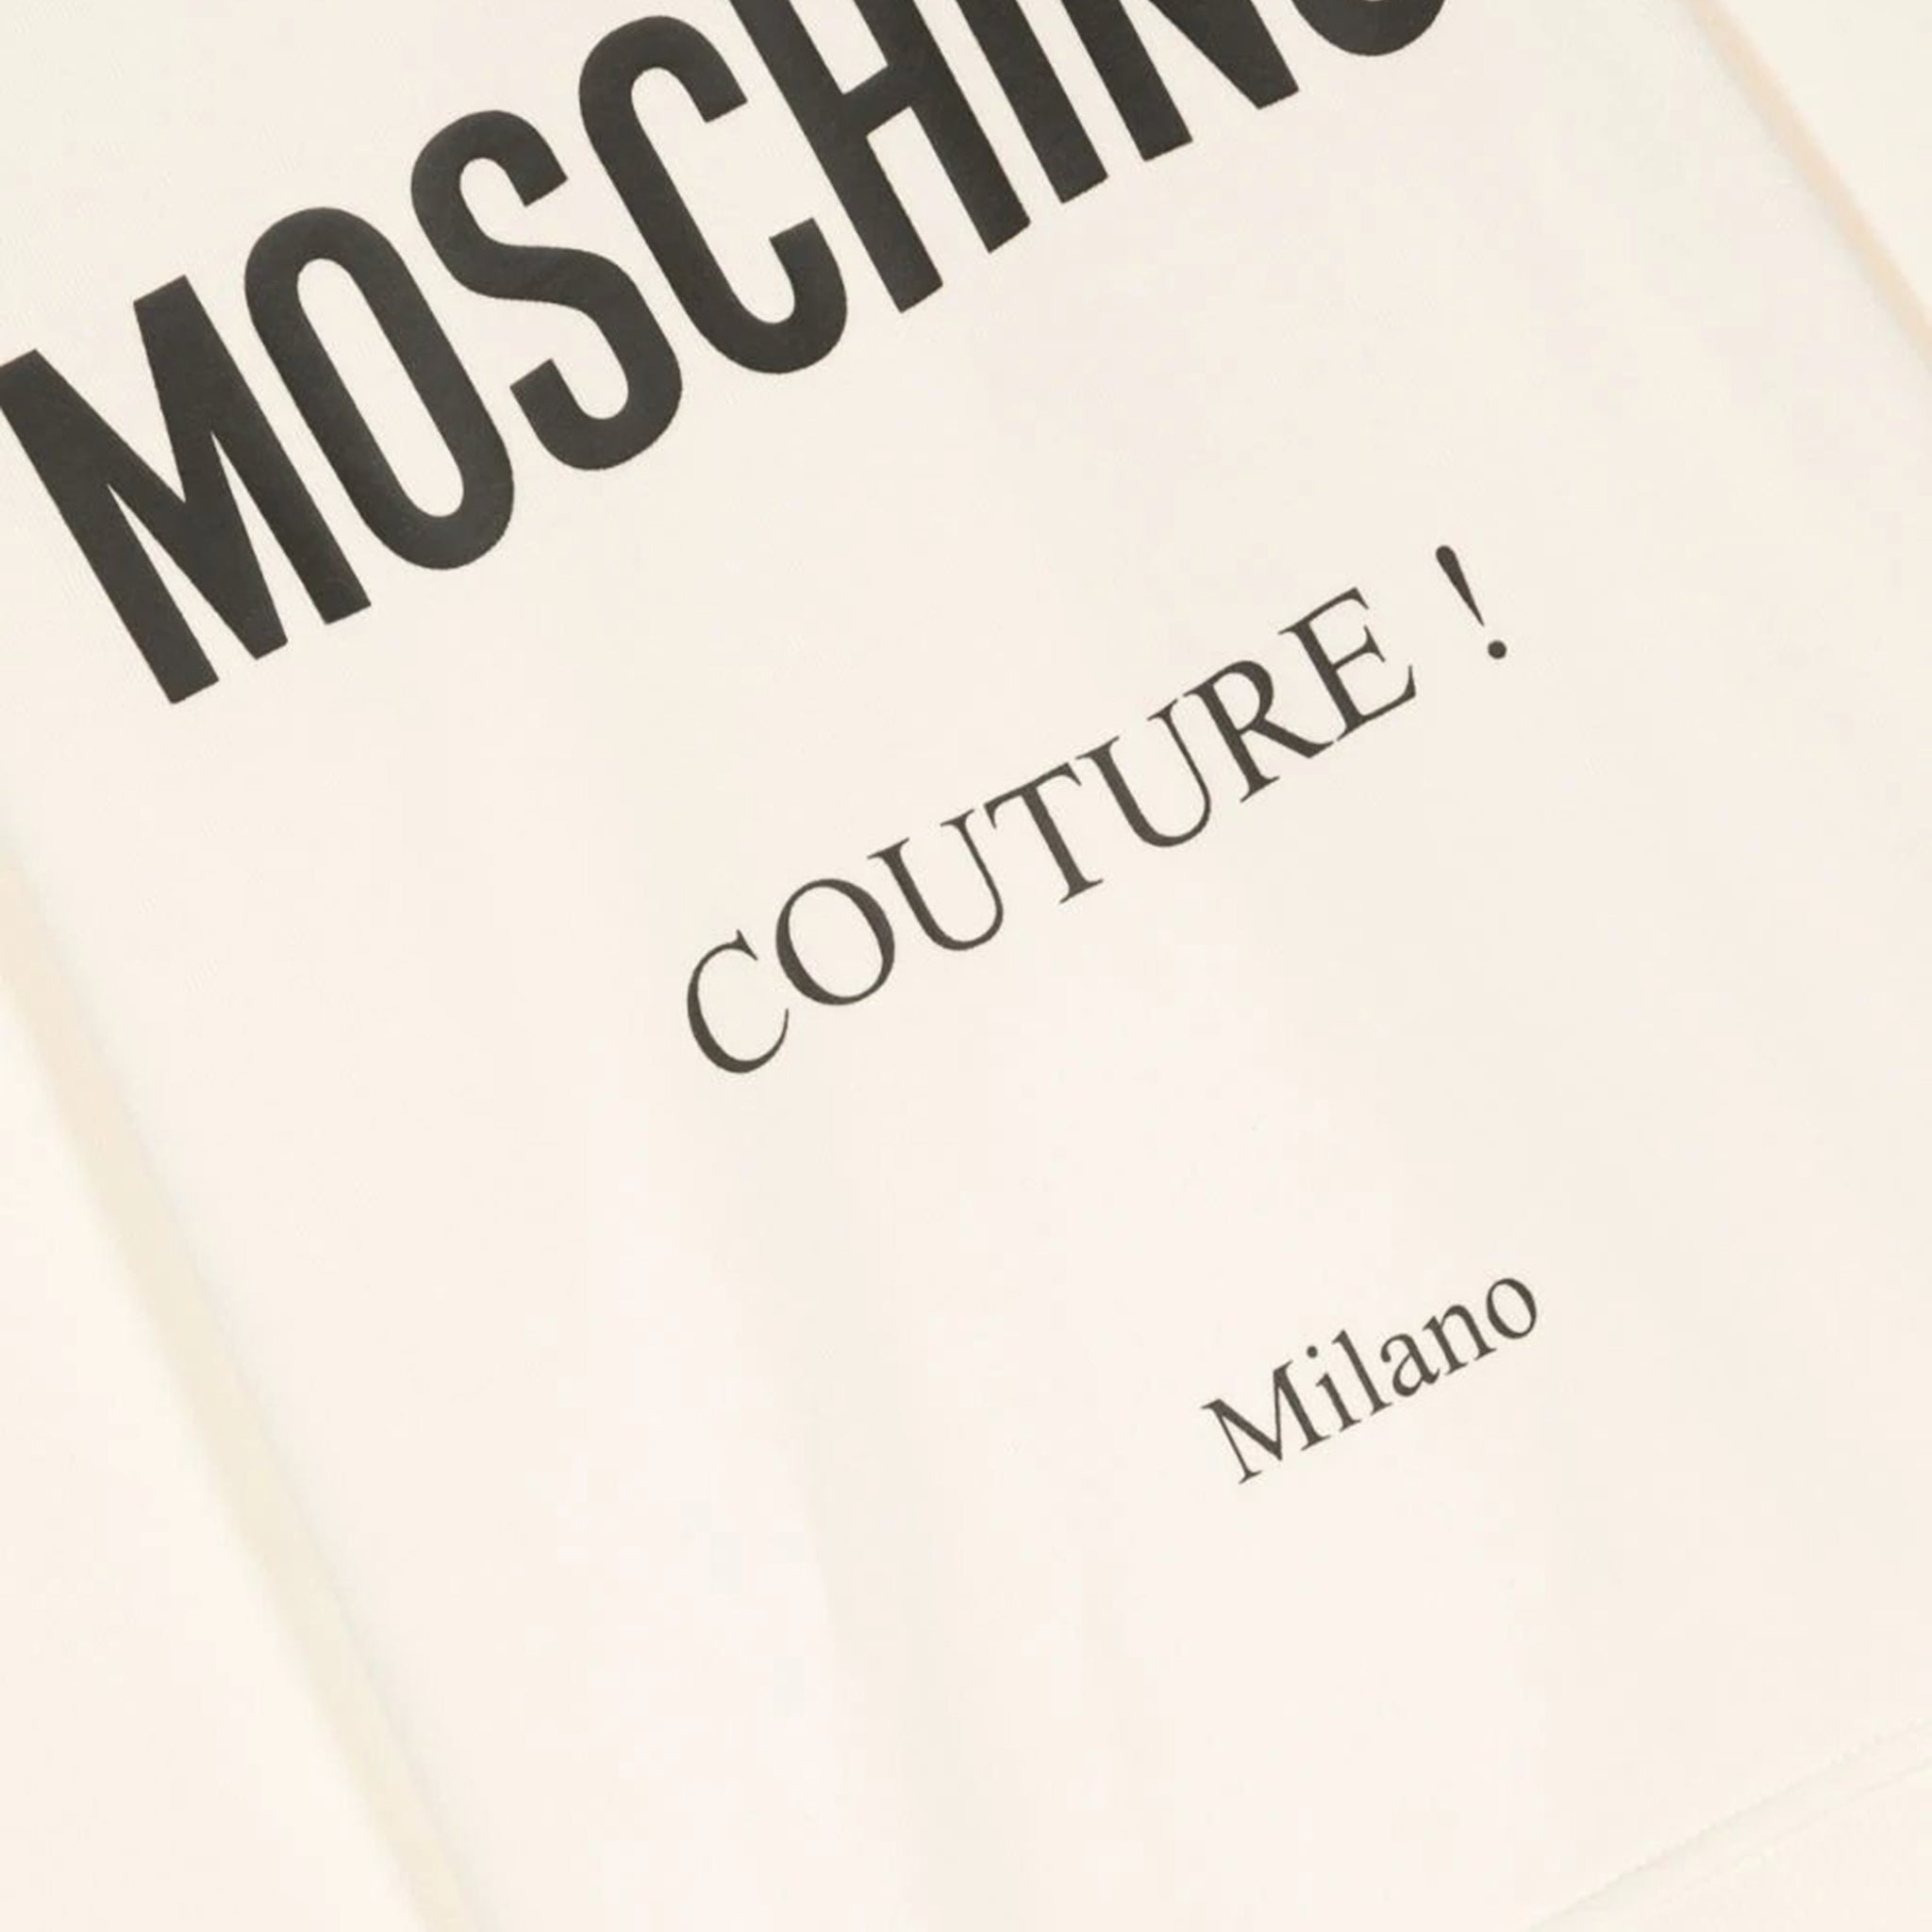 Moschino Girls Couture Logo Sweater in Cream